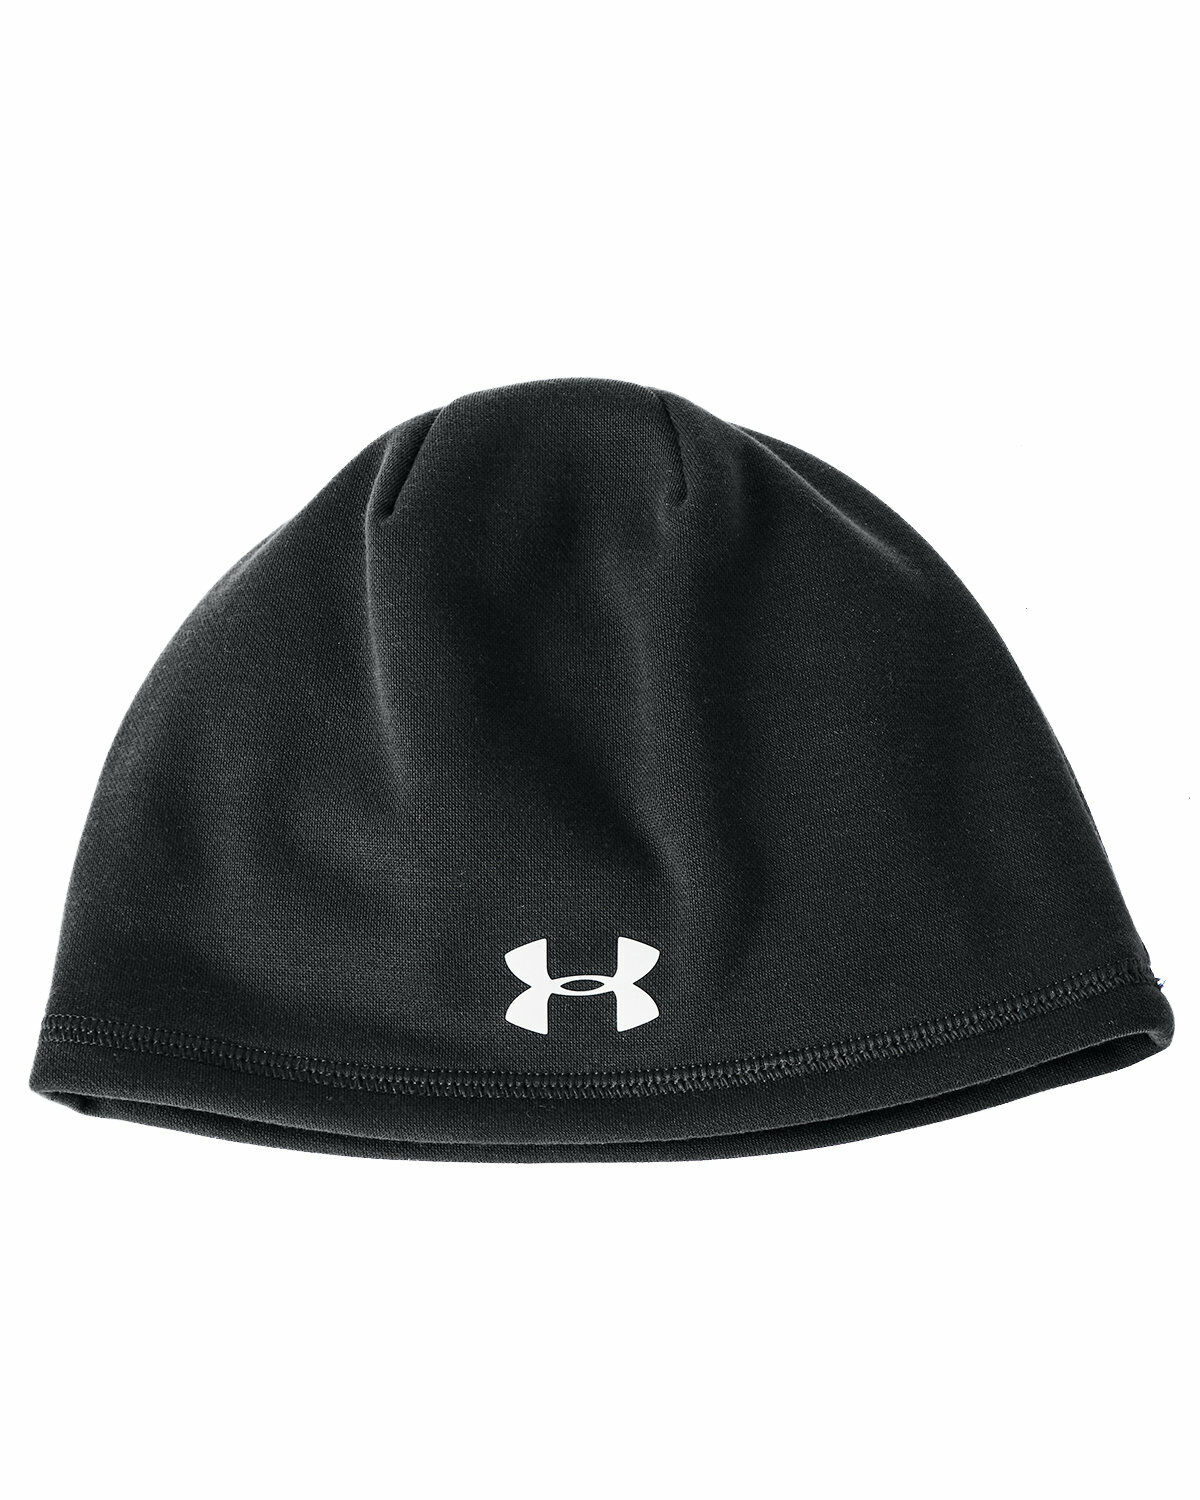 Custom Branded Under Armour Hats - Black